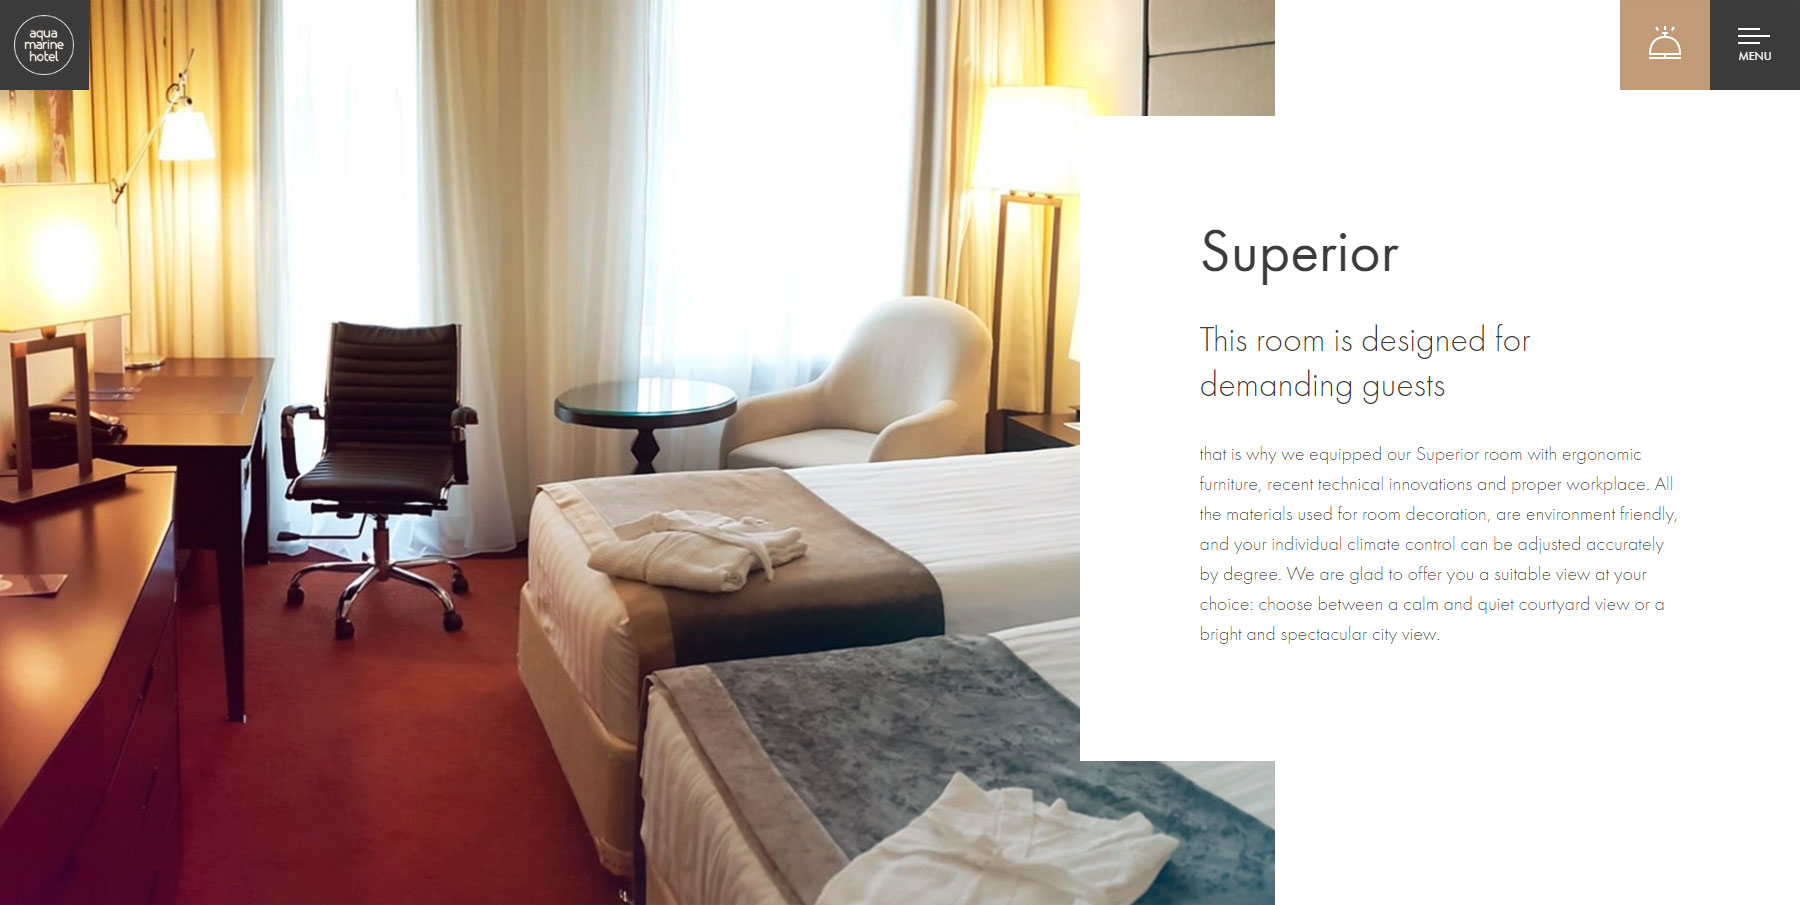 Aquamarine hotel - Website of the Day